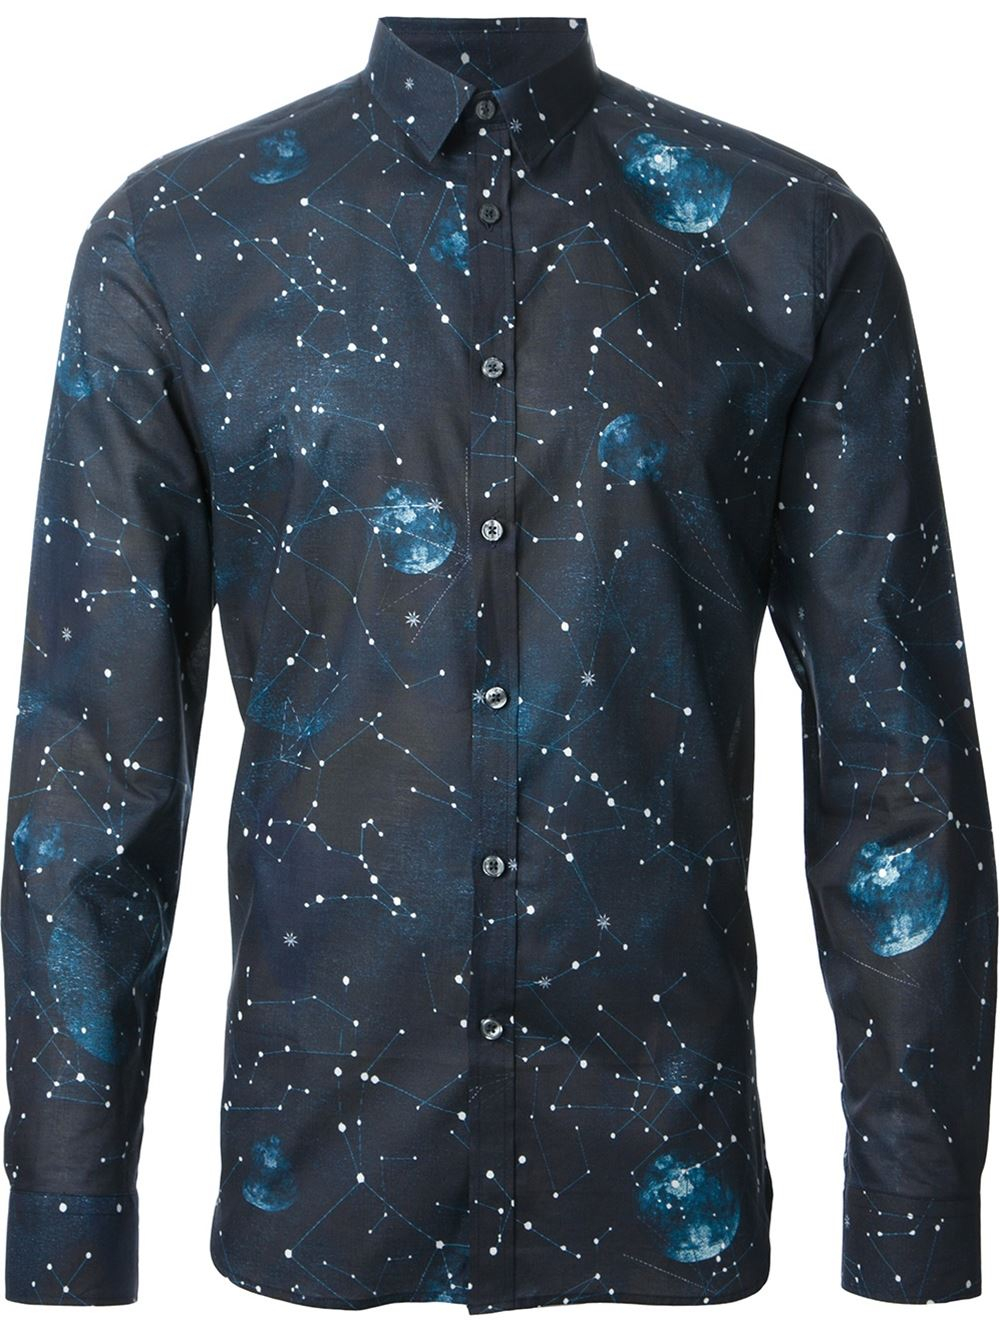 Lyst - Paul Smith Galaxy Print Shirt in Blue for Men